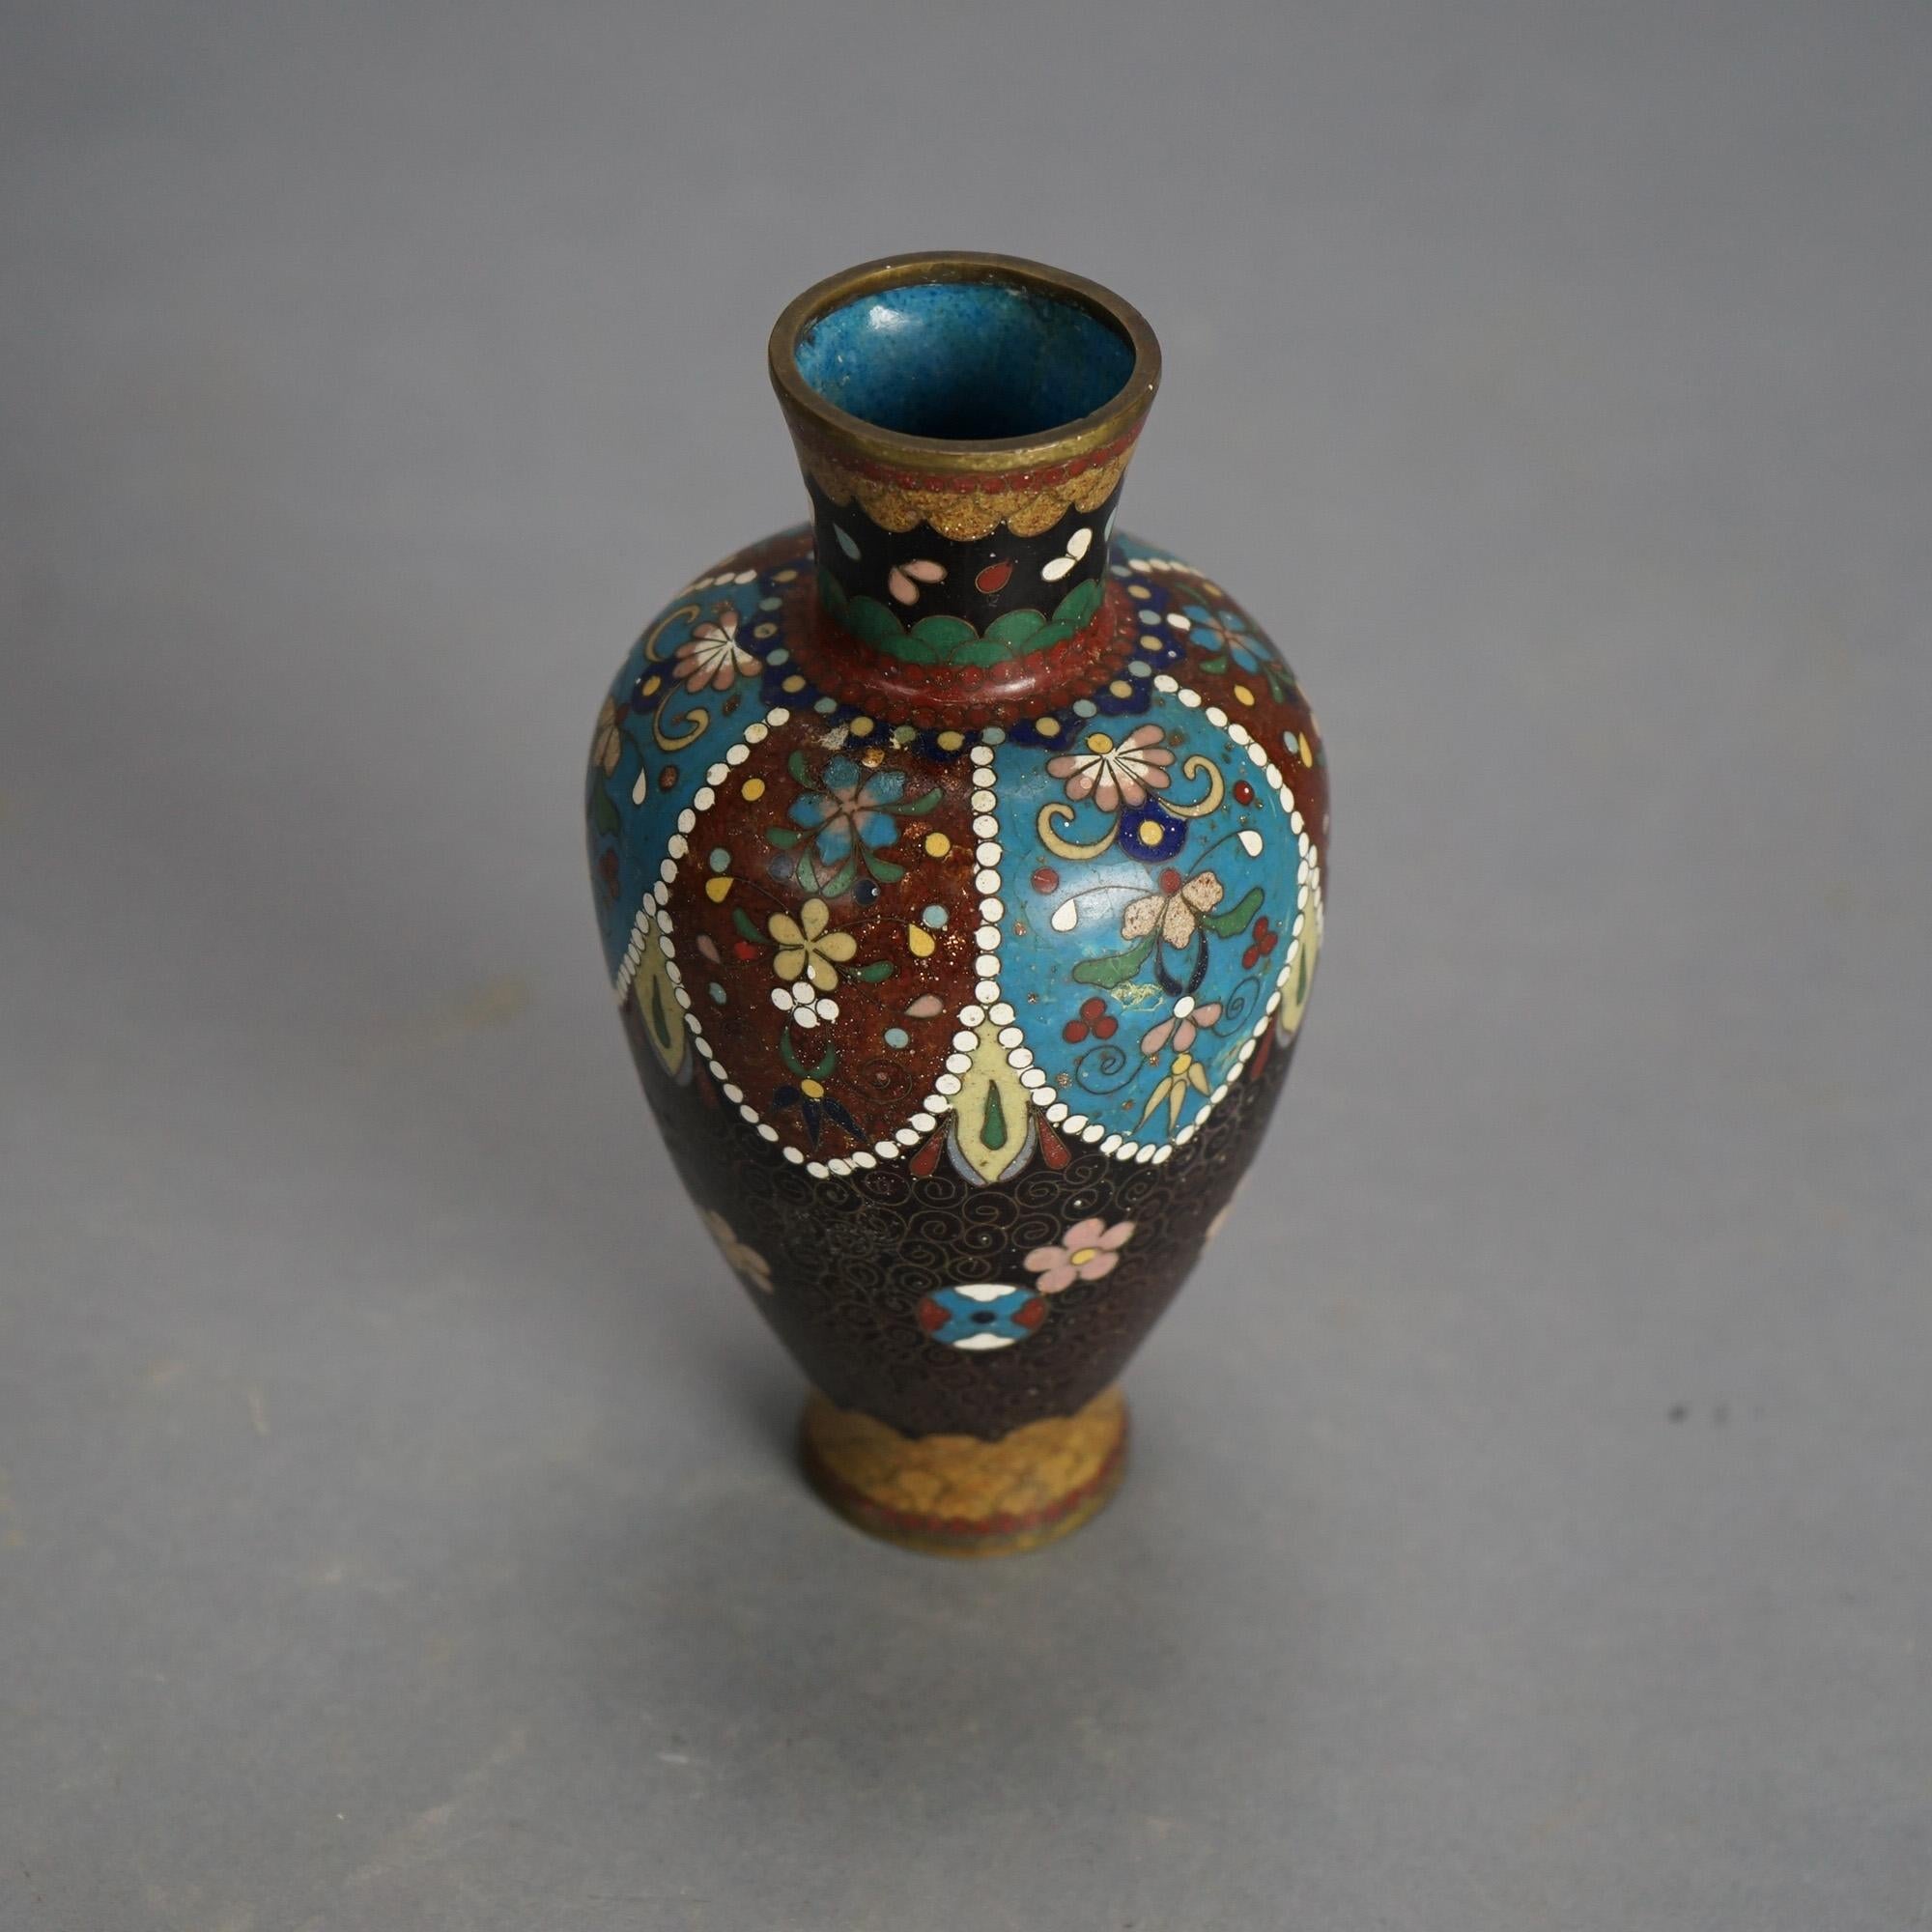 Seven Antique Chinese Cloisonne Enameled Vases C1920

Measures - 3.5